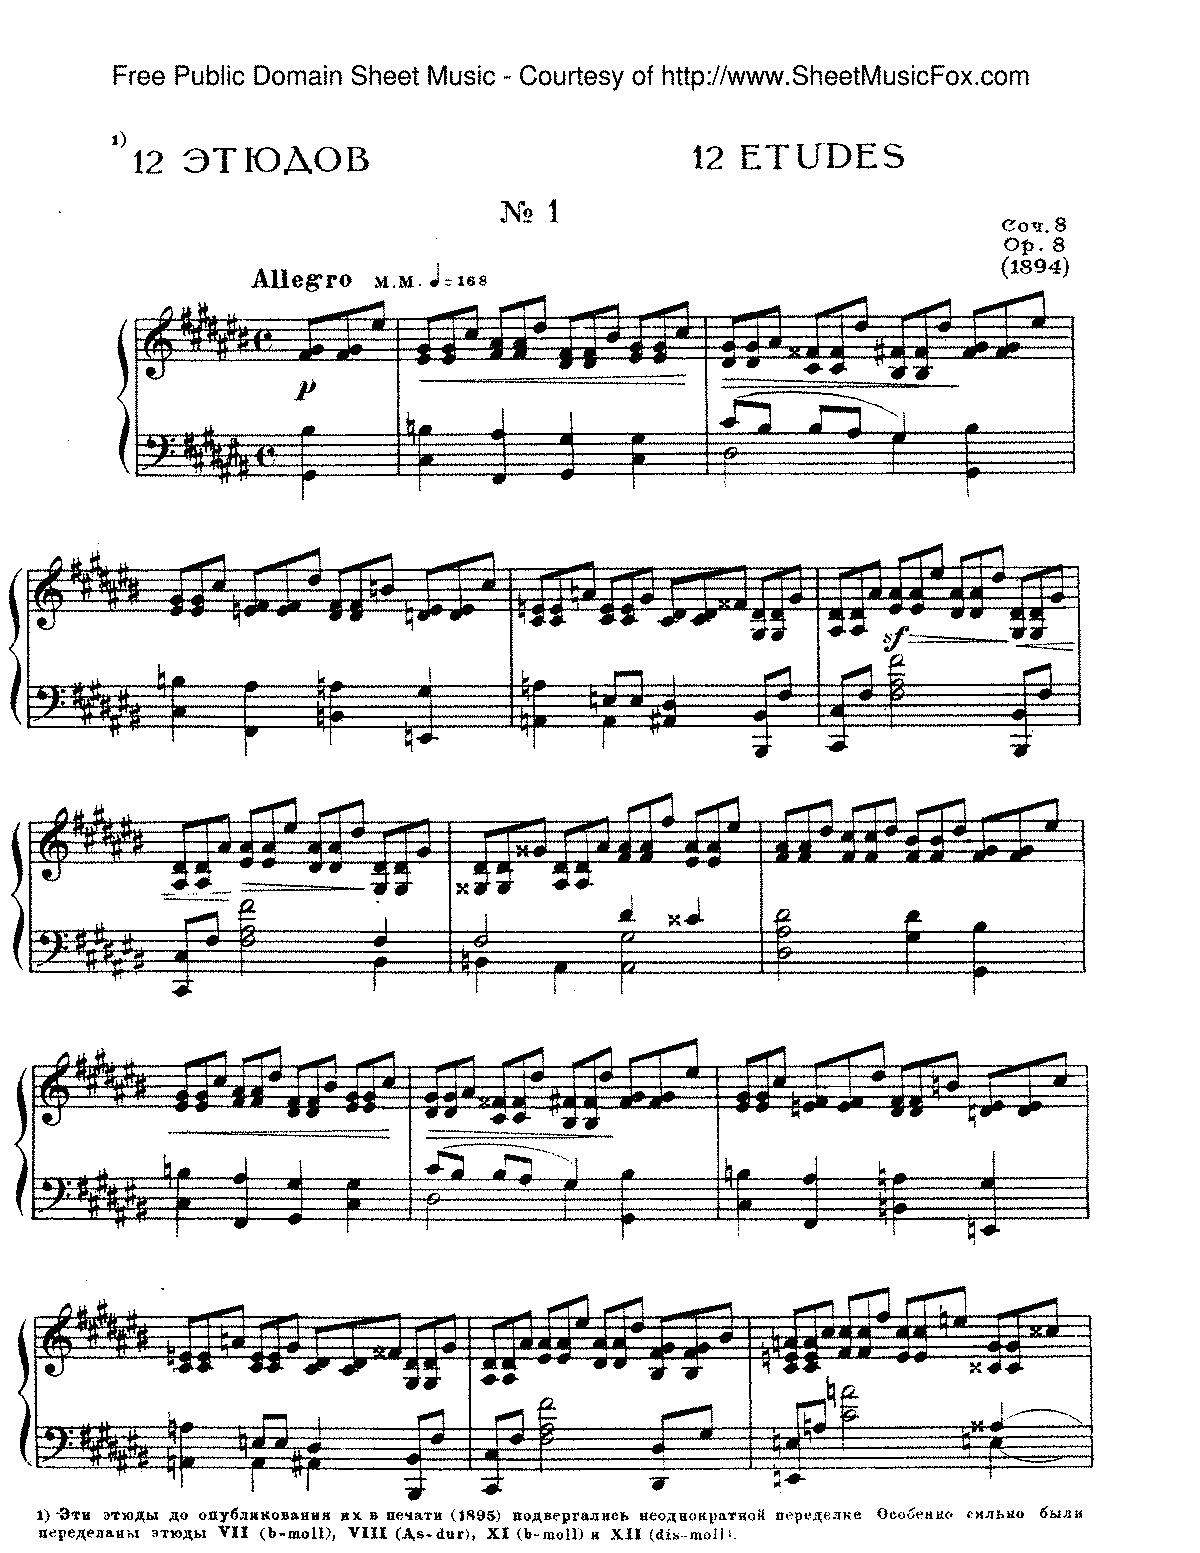 12 Etudes, Op.8 (Scriabin, Aleksandr) - IMSLP